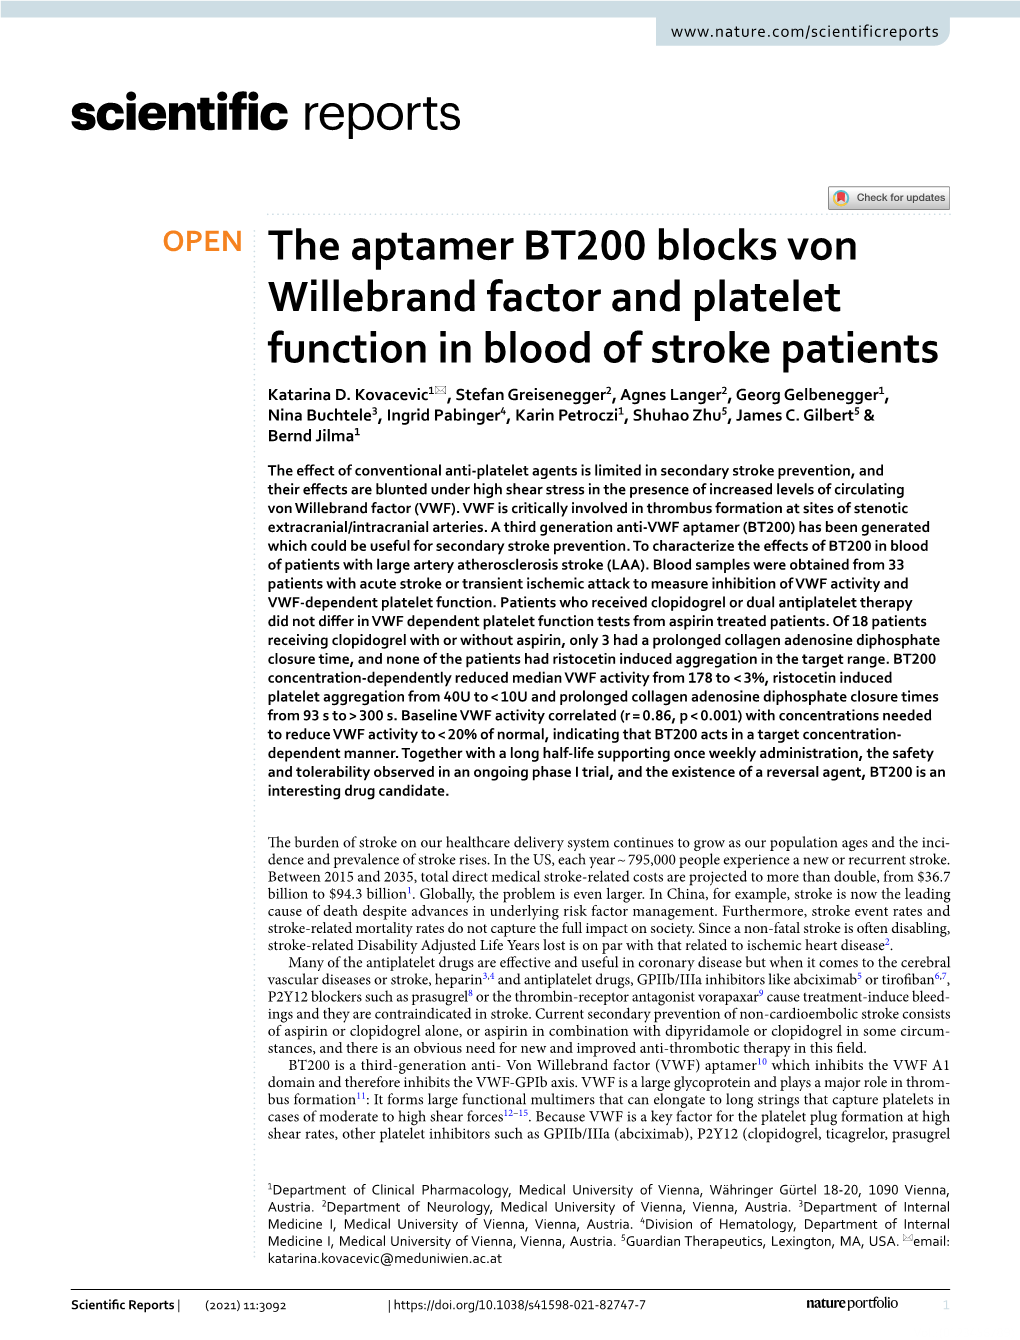 The Aptamer BT200 Blocks Von Willebrand Factor and Platelet Function in Blood of Stroke Patients Katarina D